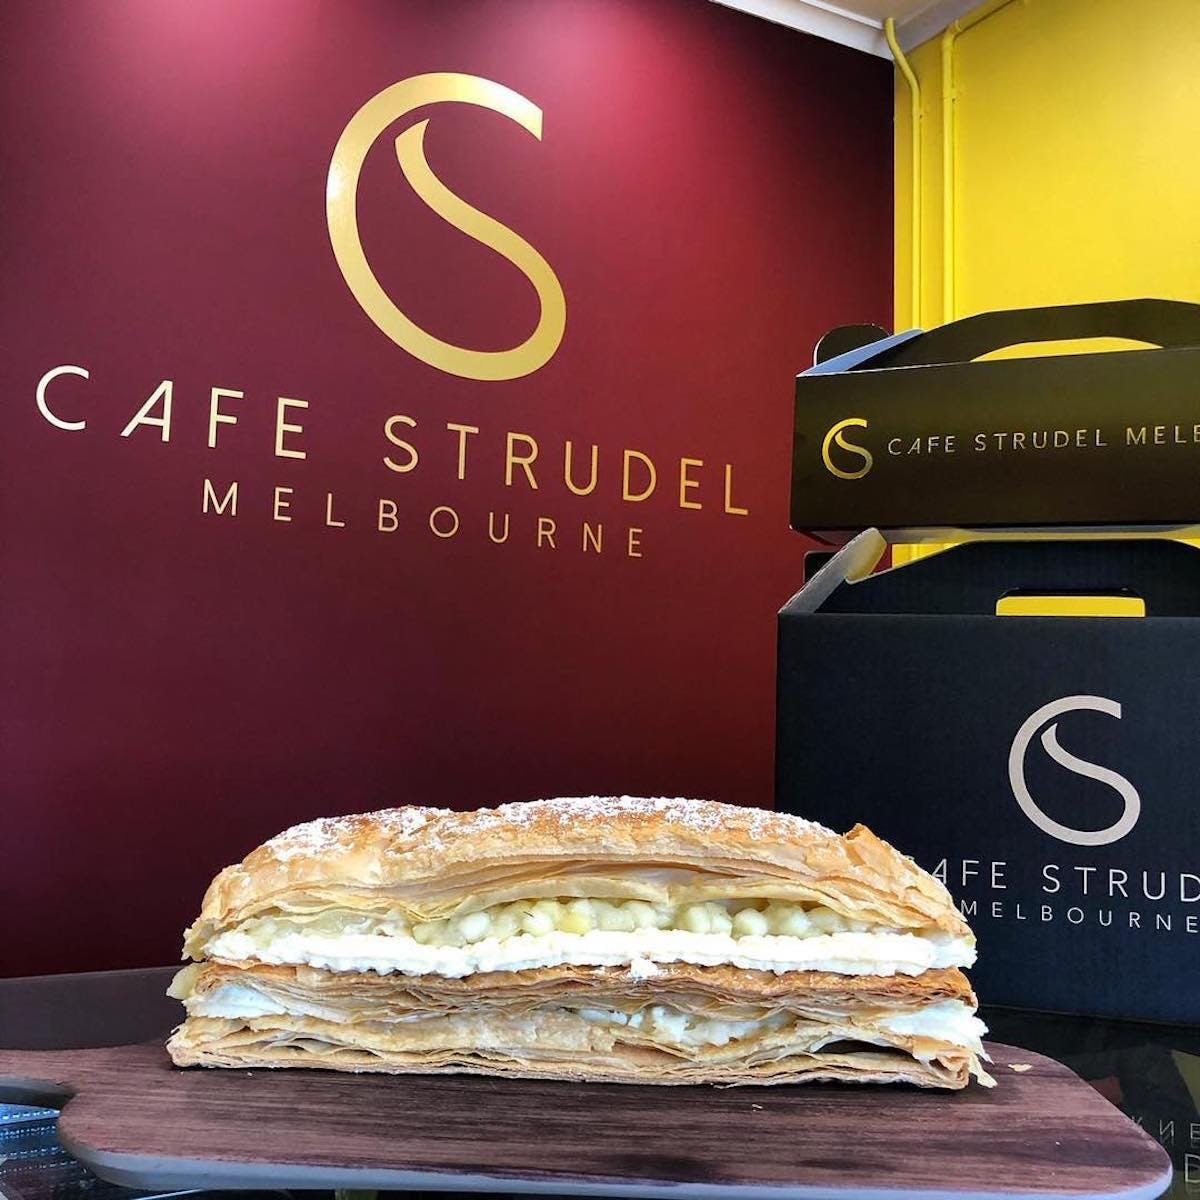 Cafe Strudel Melbourne - Surfers Paradise Gold Coast